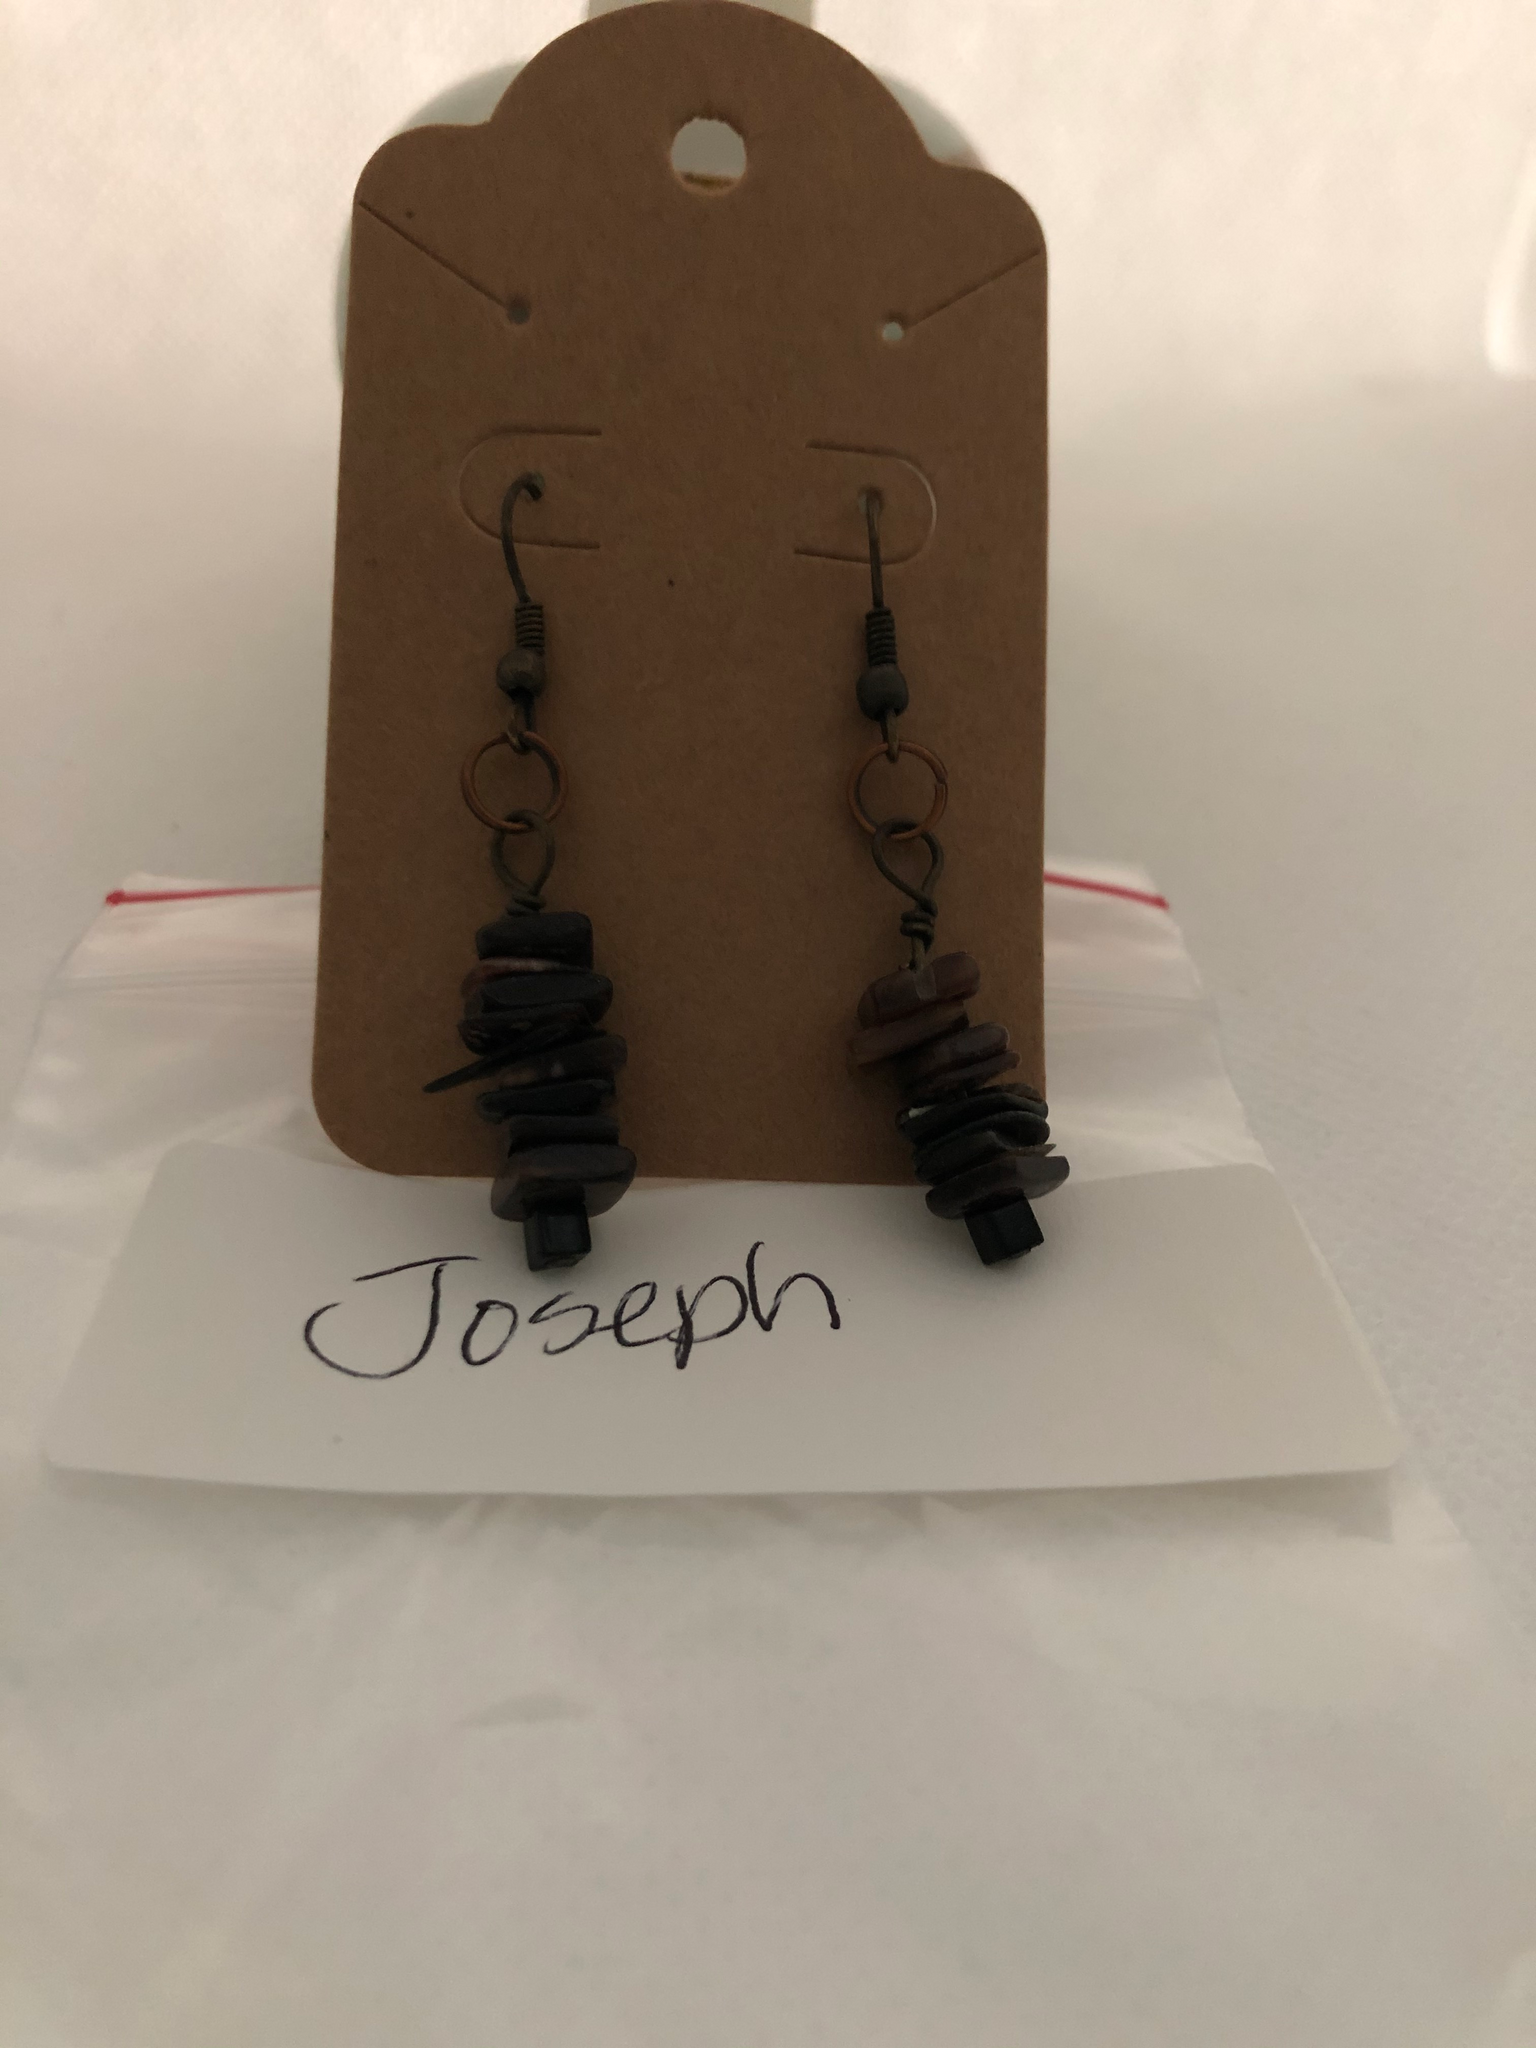 Joseph Earrings